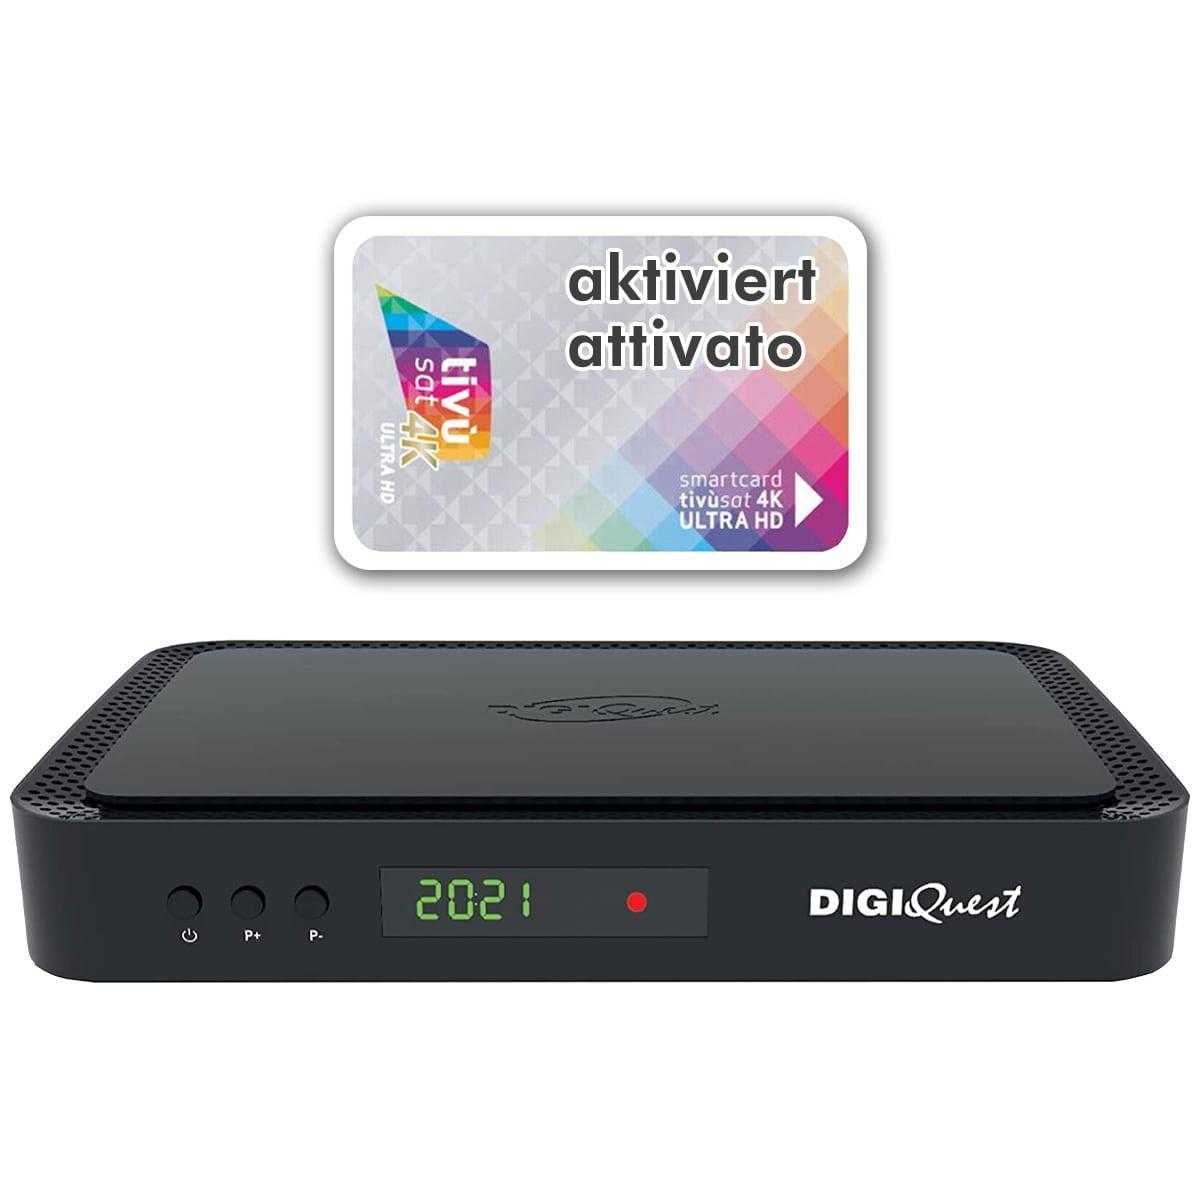 DIGIQuest Q90 4K UHD Combo Receiver mit Aktiver Tivusat Karte (DVB-S2/T2 HDMI USB 3.0 LAN) von DIGIQuest